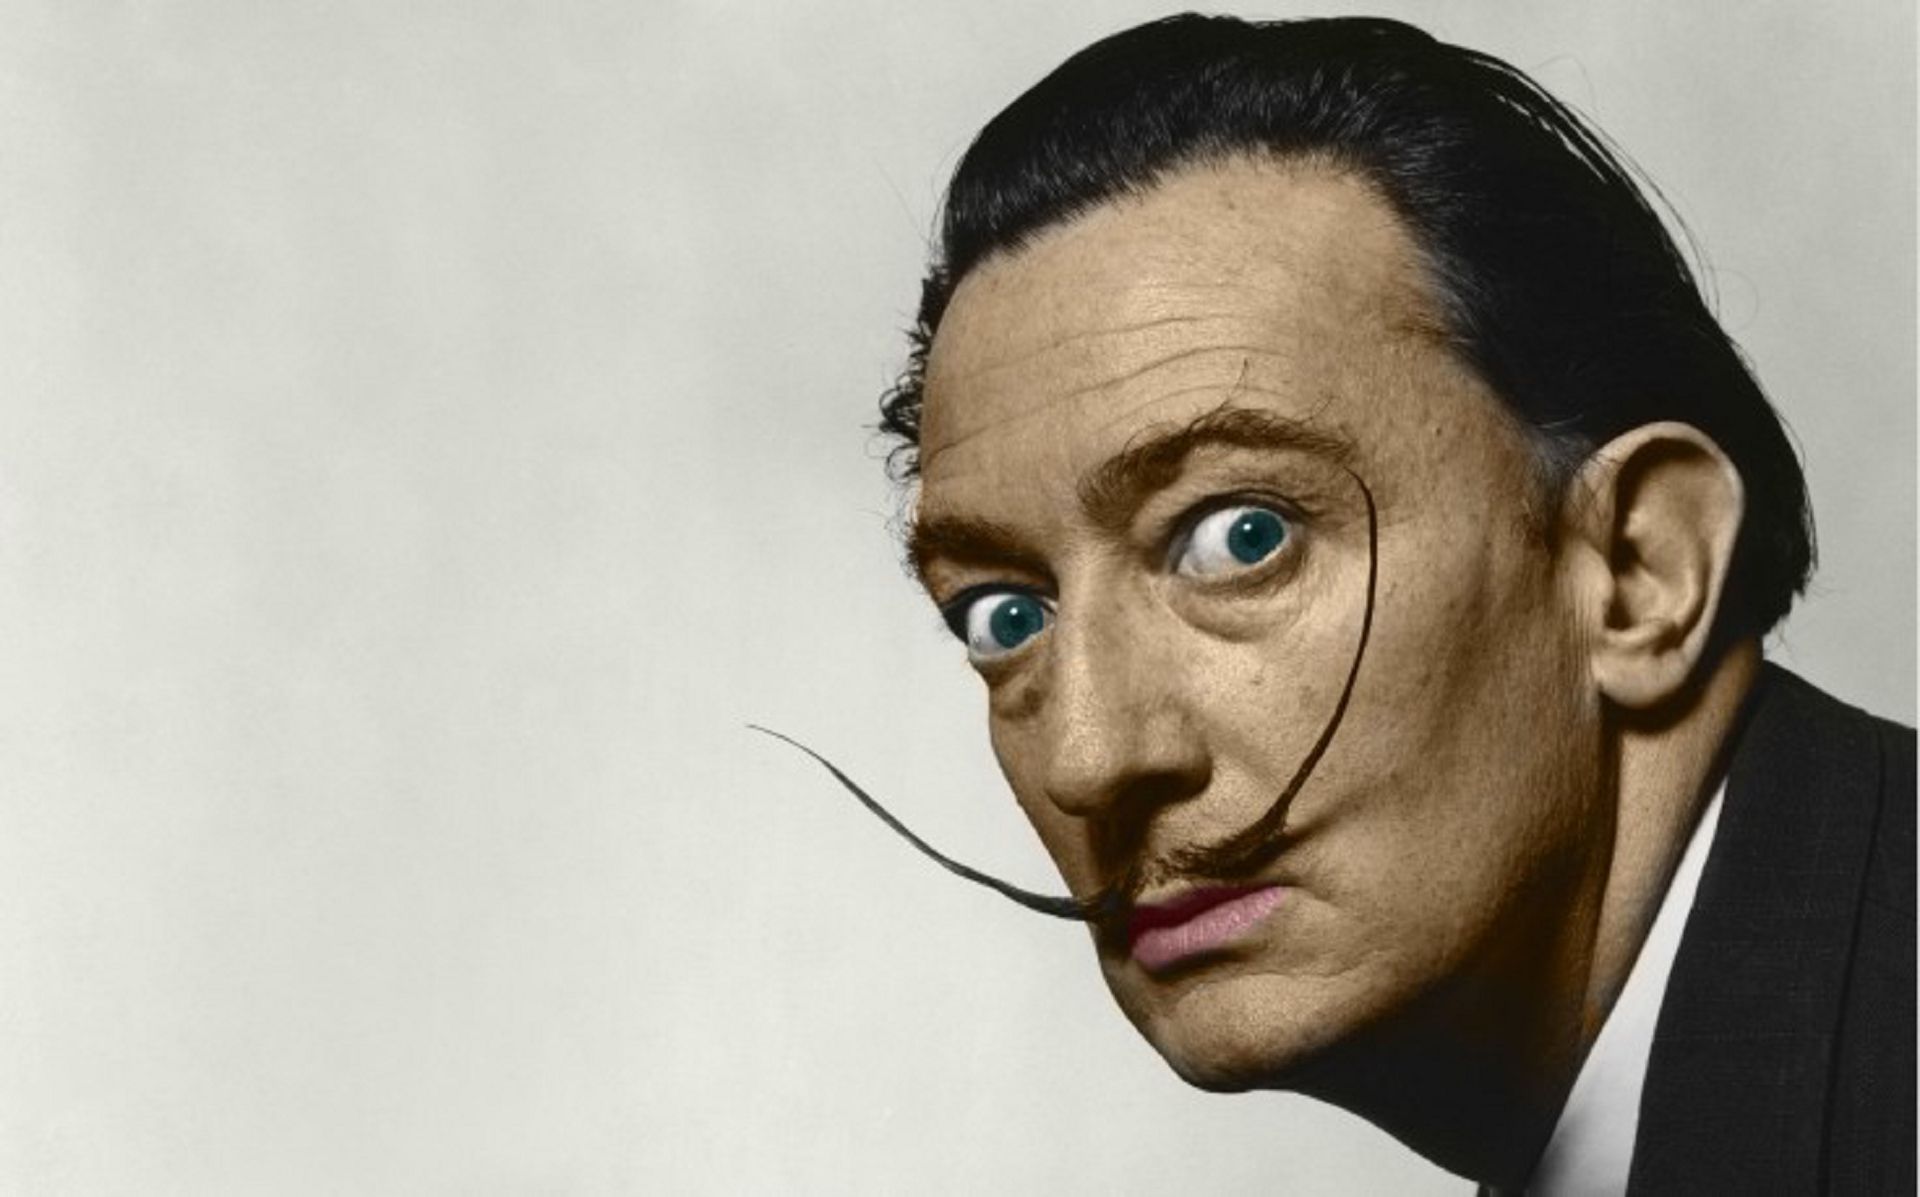 Salvador Dali Wallpaper Image Photo Picture Background